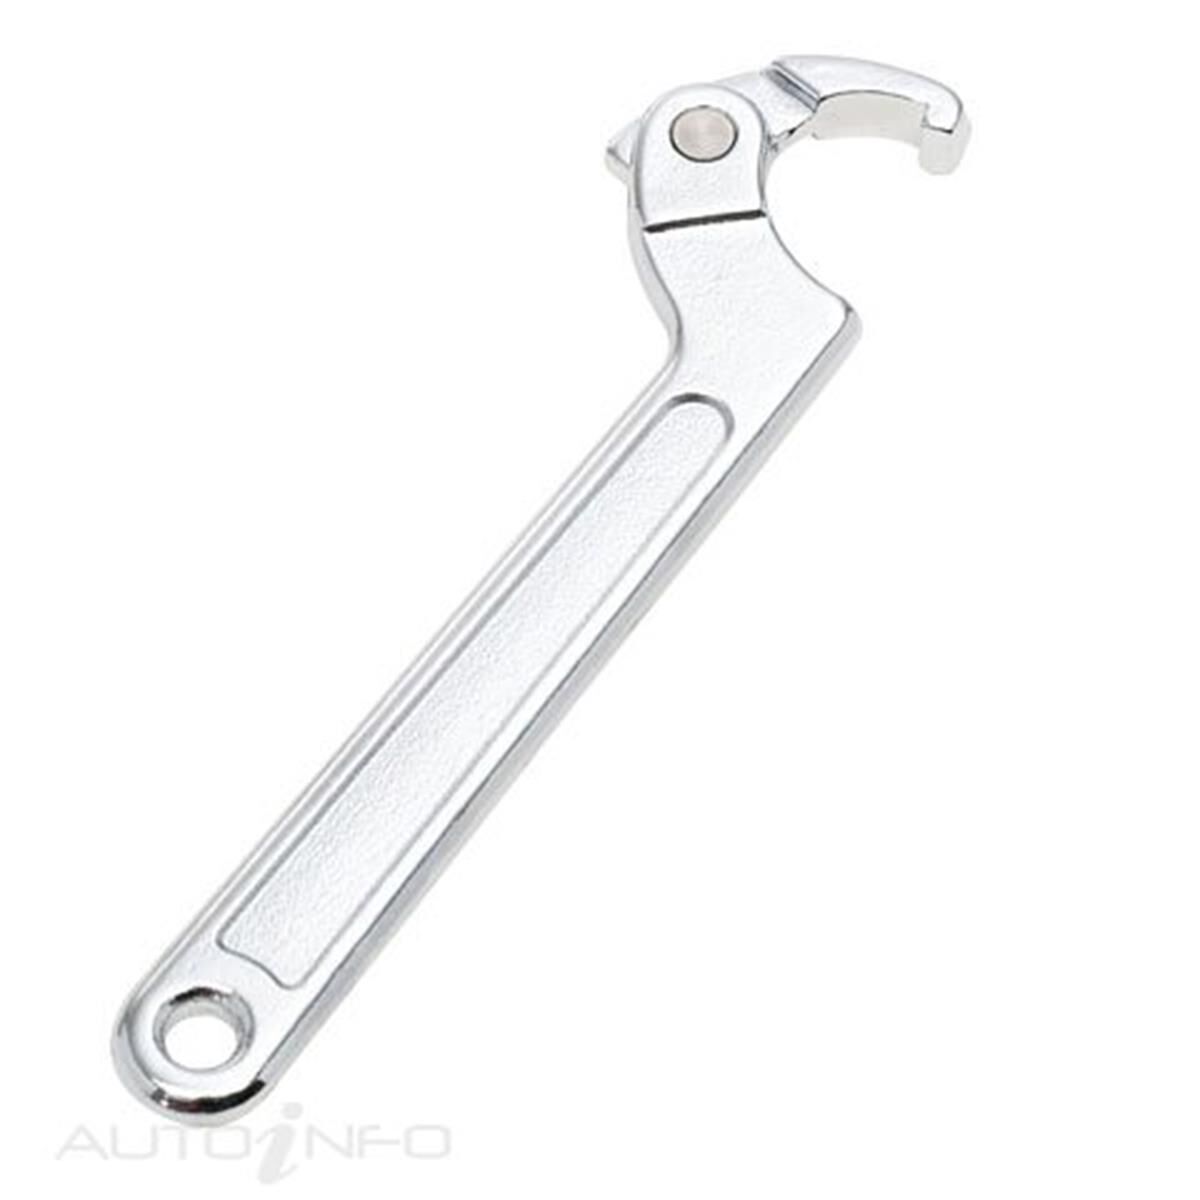 Toledo C Hook Wrench - 3/4-2 Inch - 315150